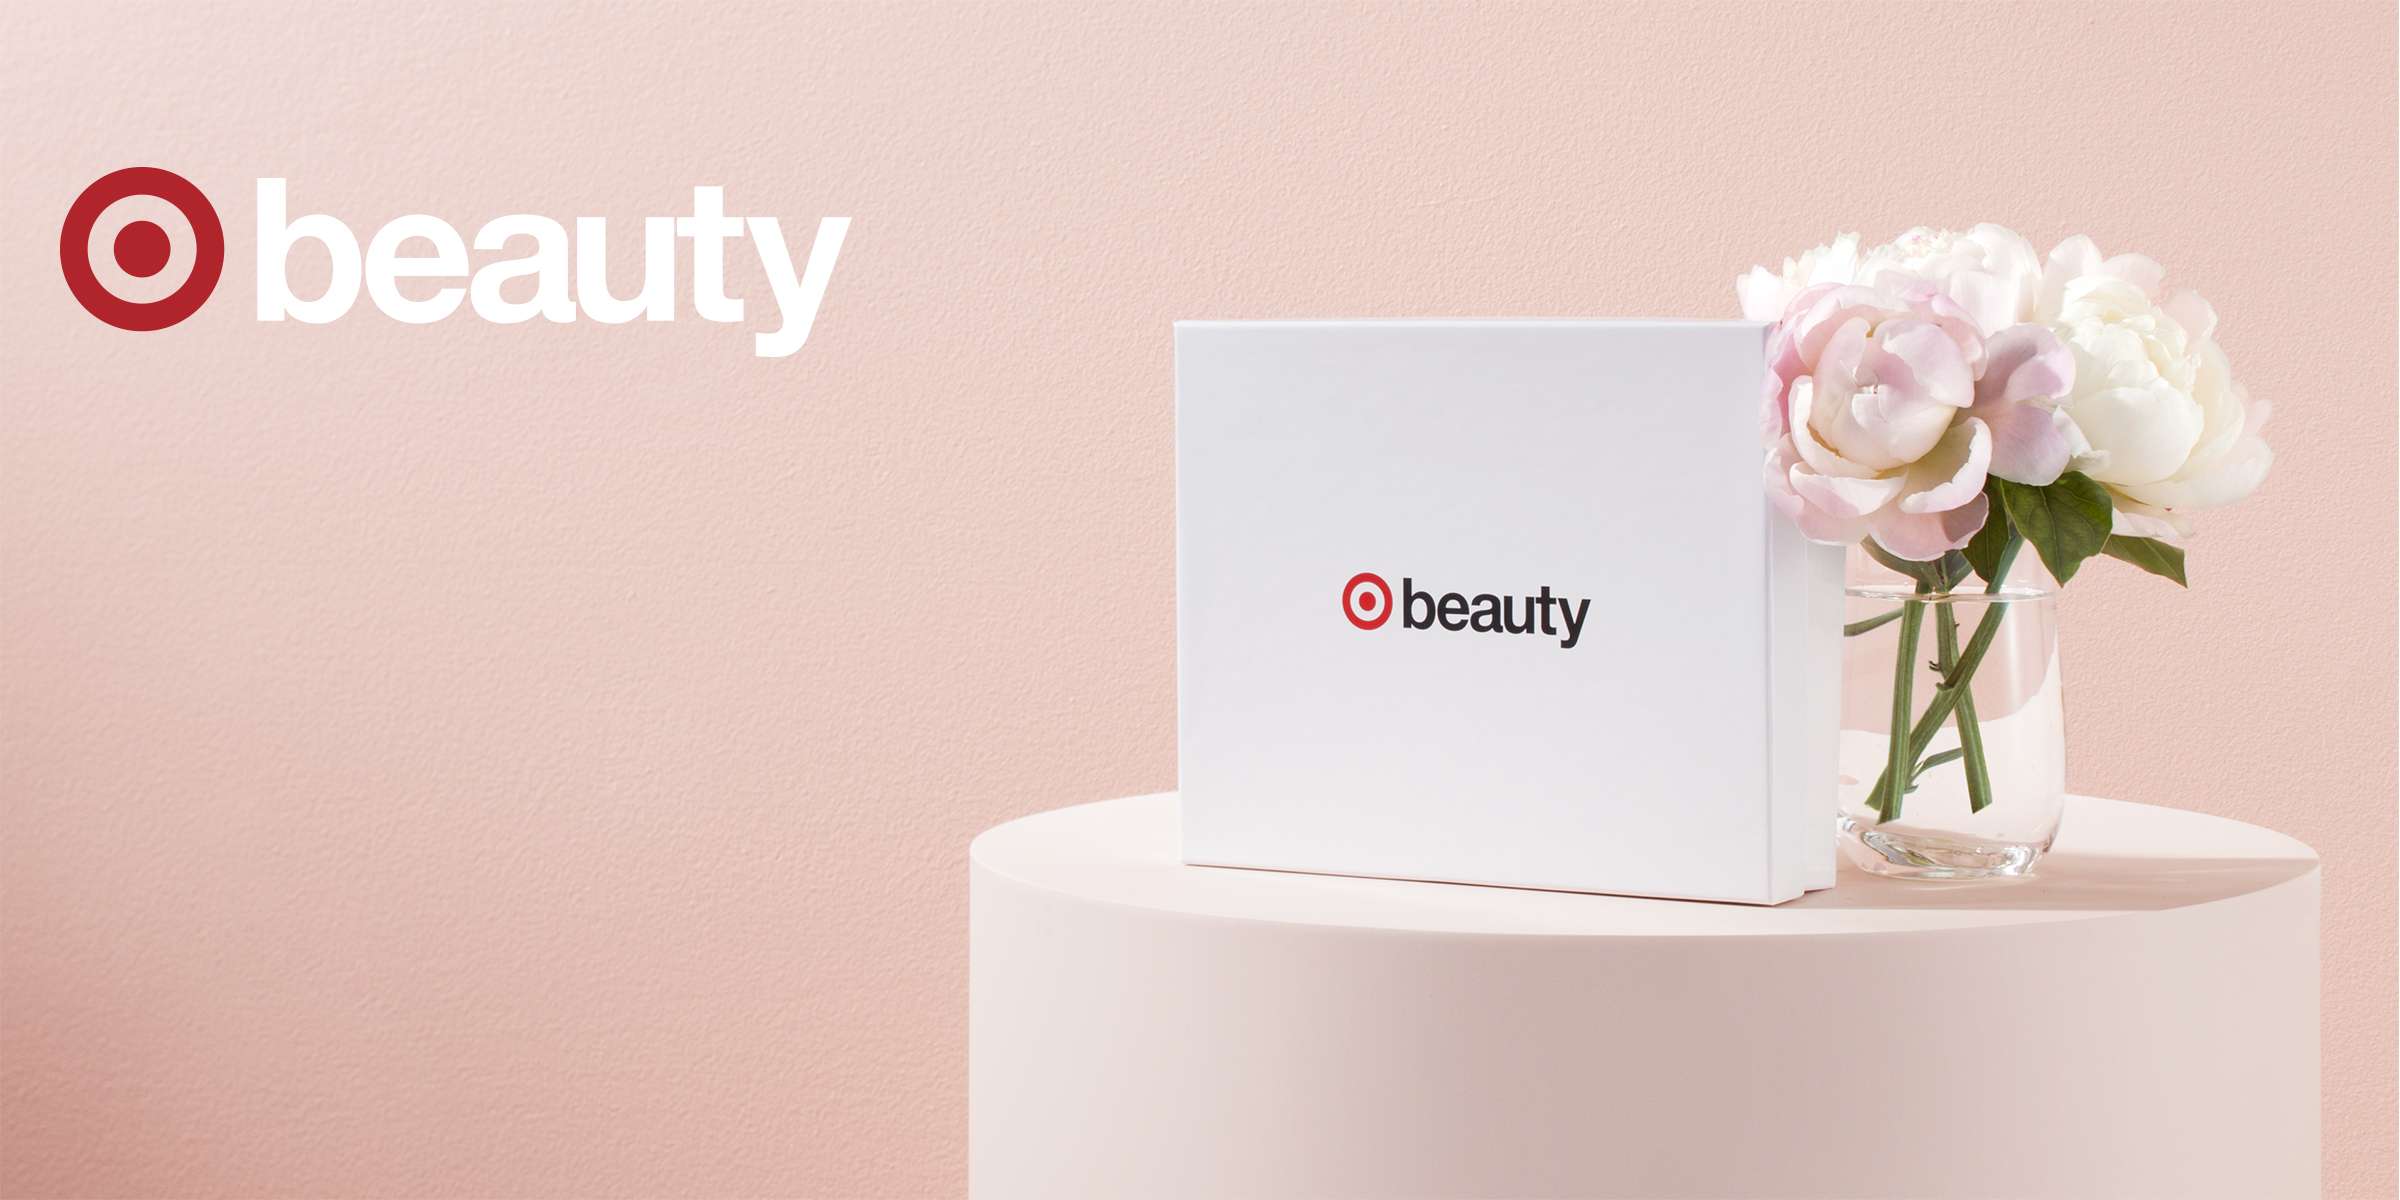 target beauty box